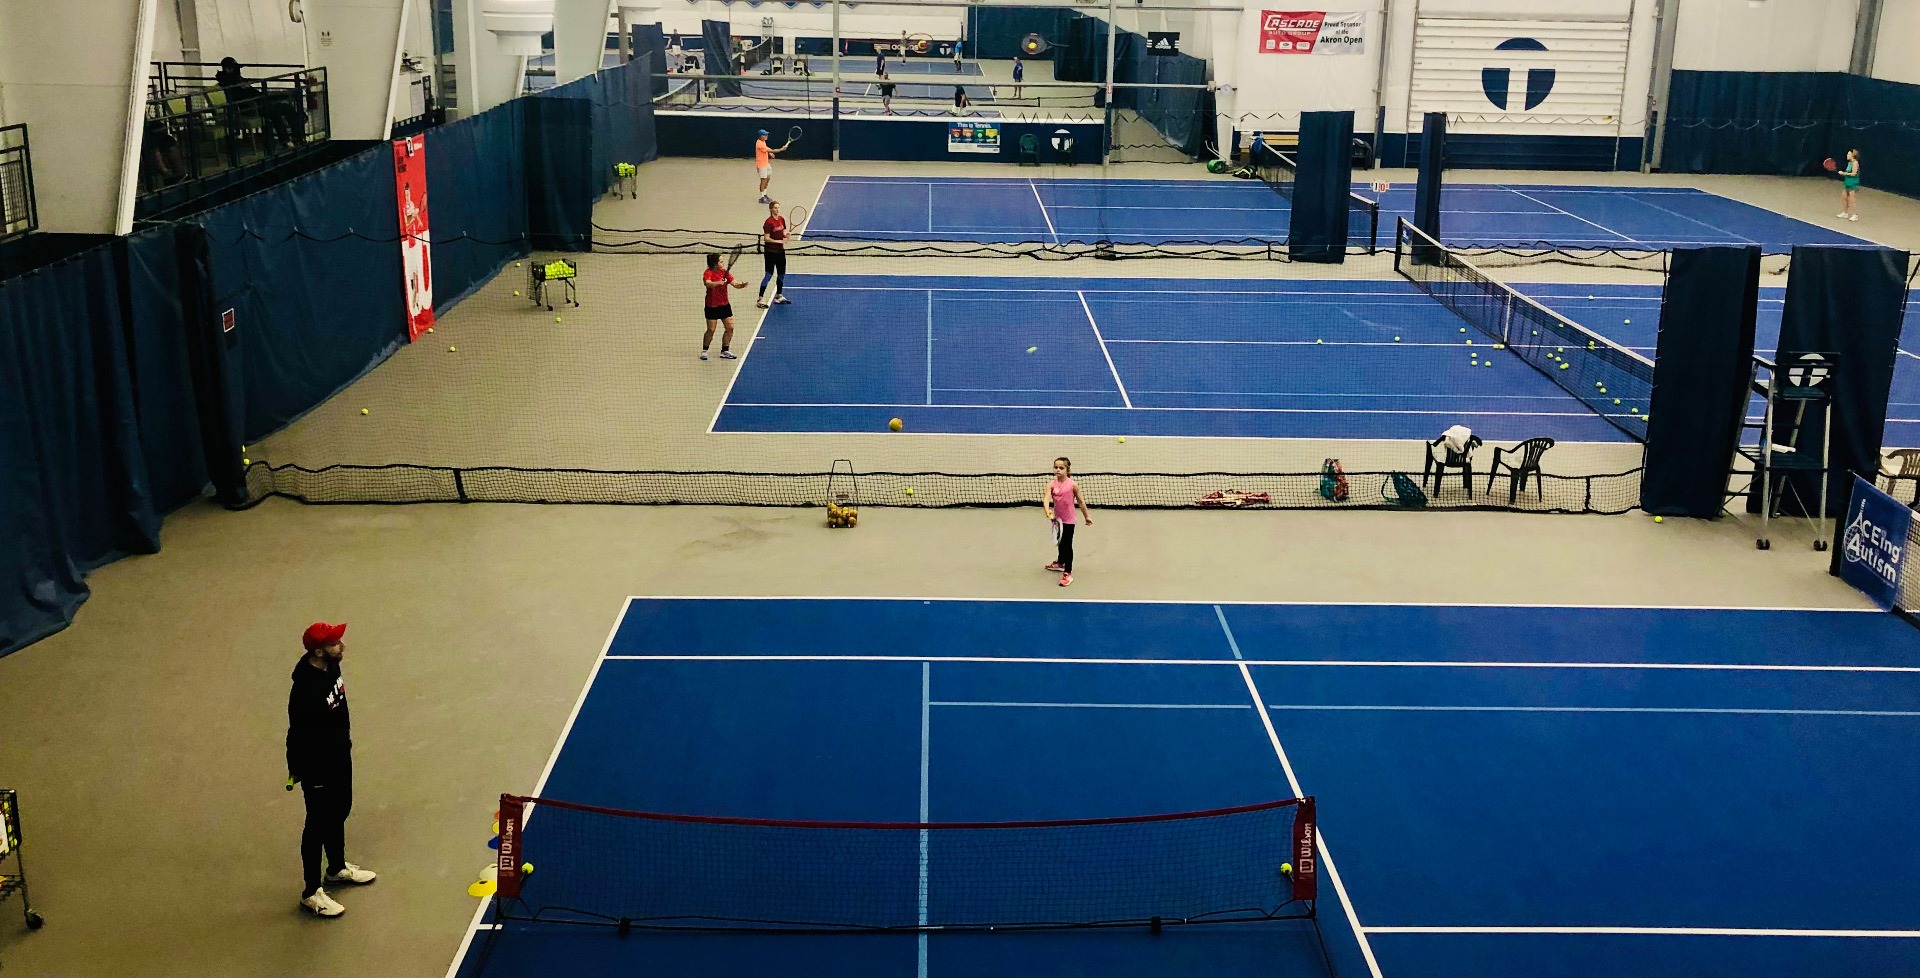 Towpath Tennis Center